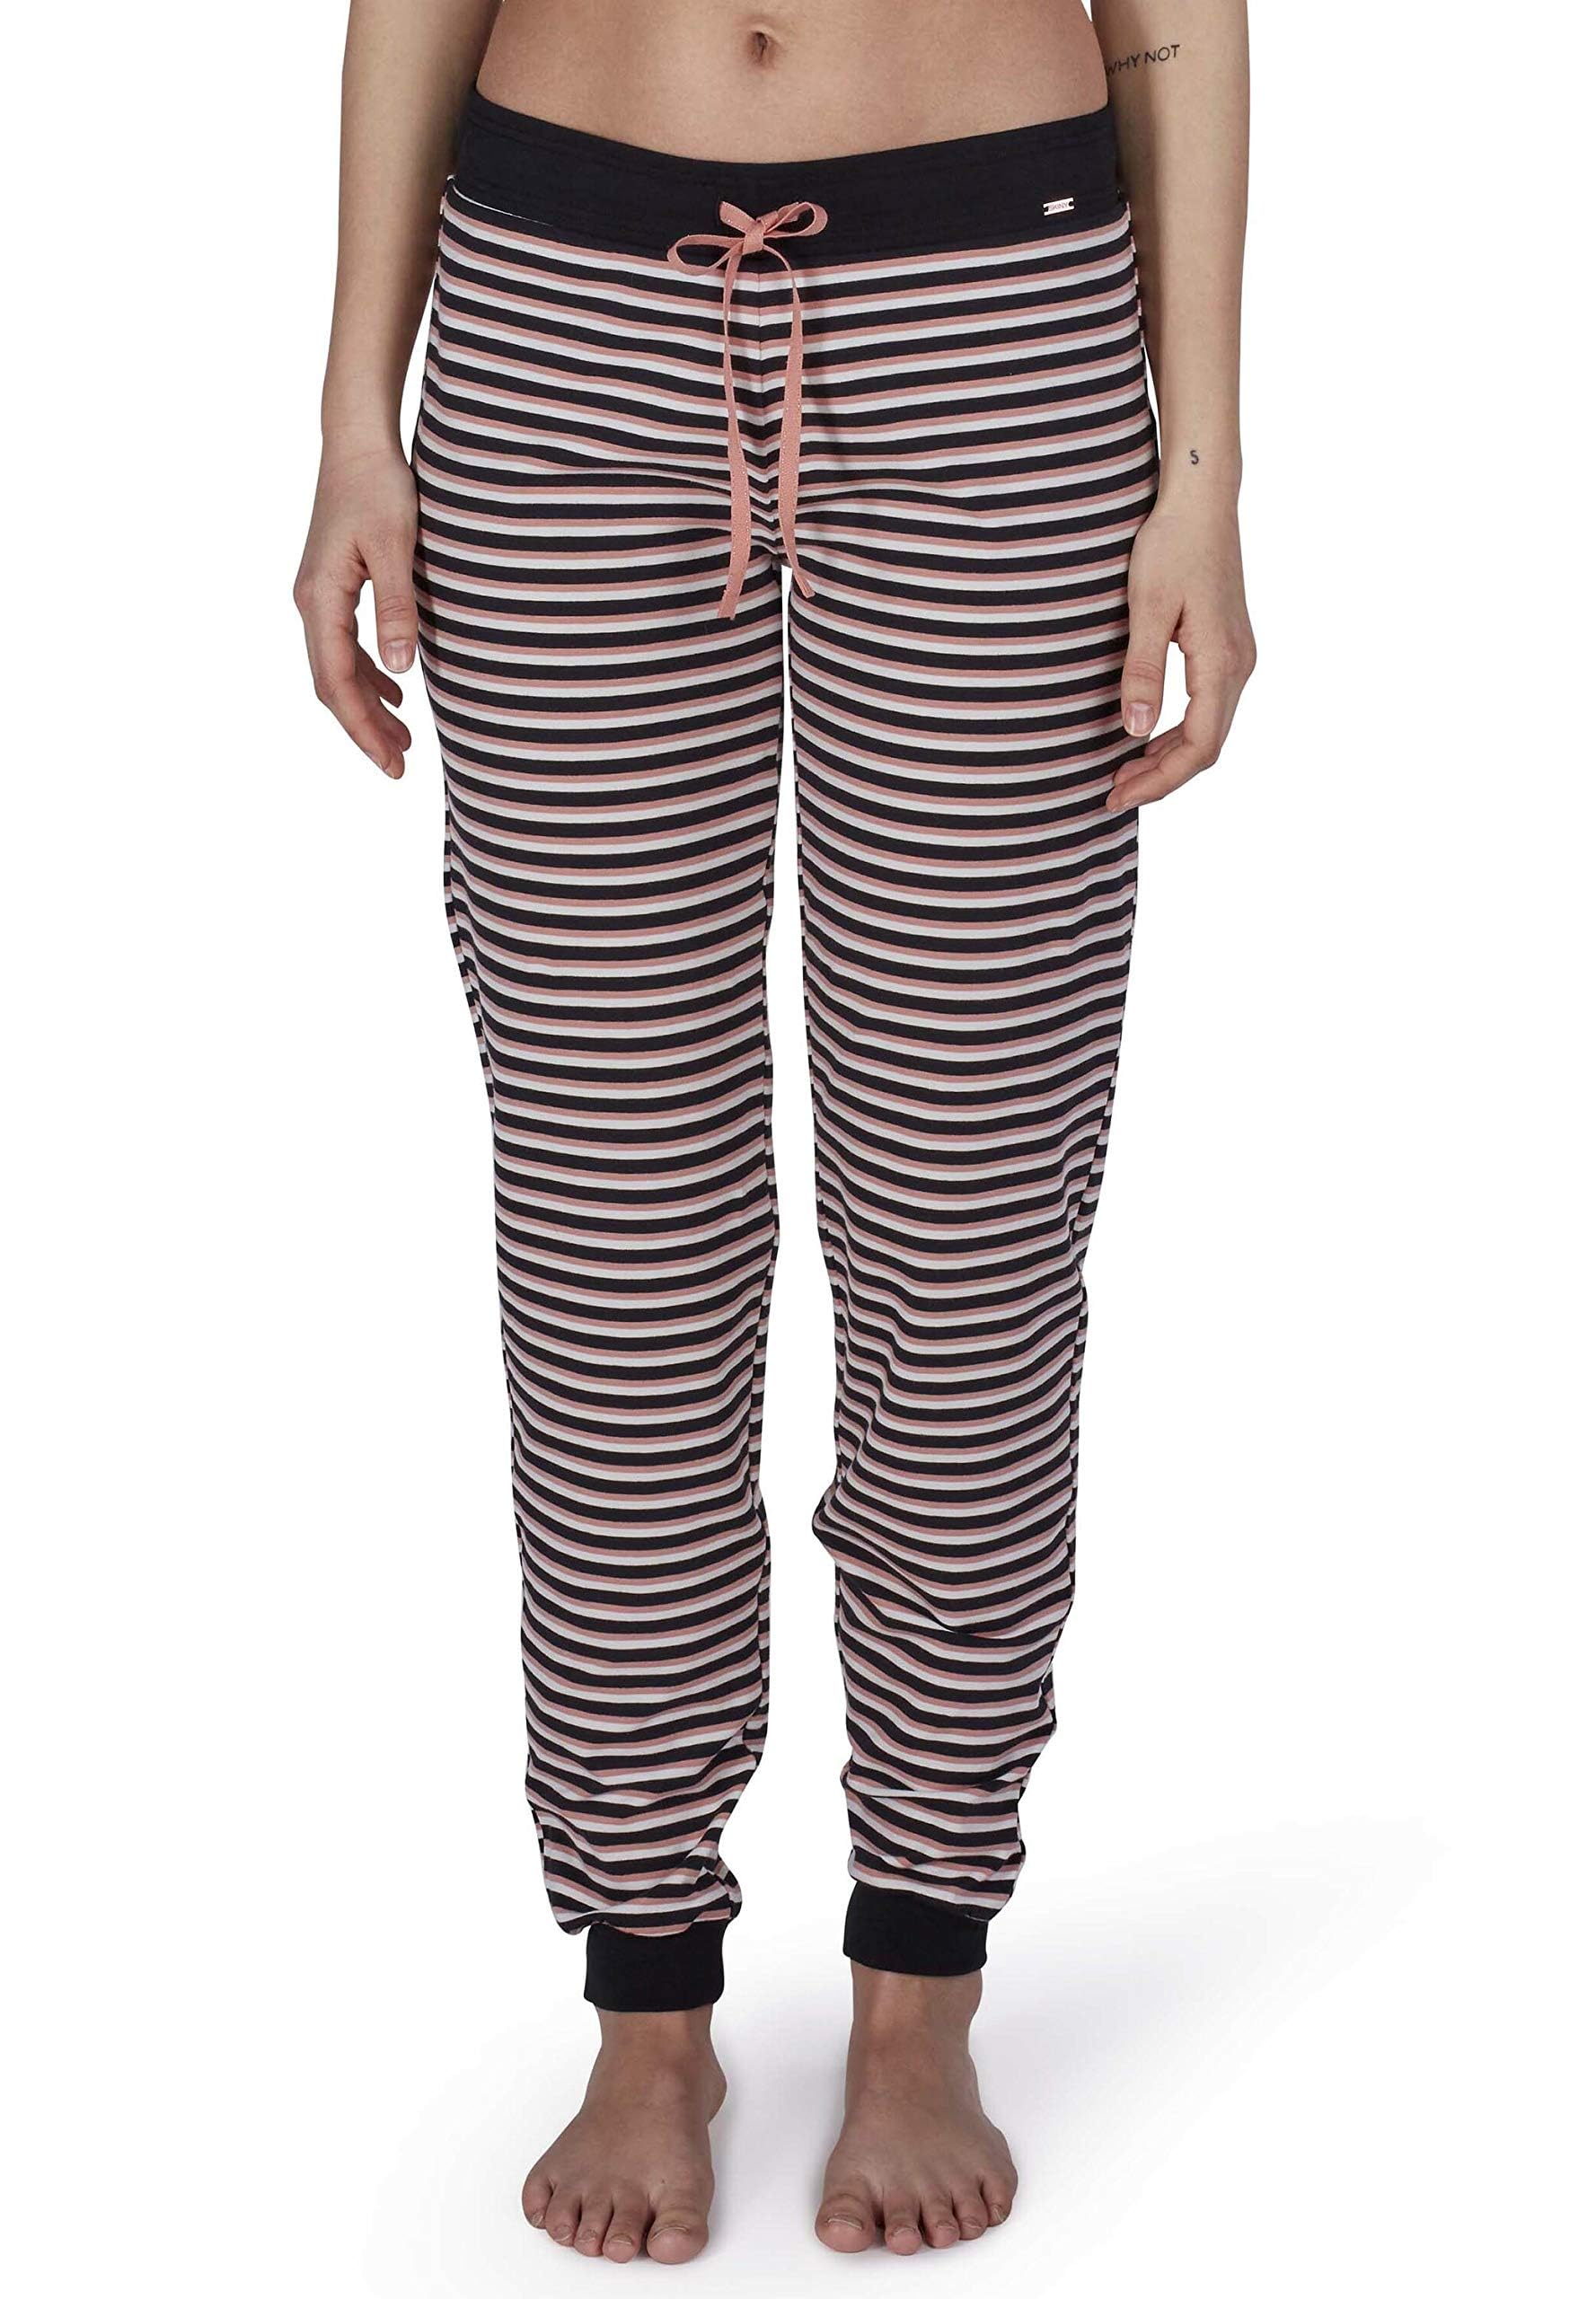 Skiny Damen Sleep & Dream Lang Schlafanzughose, Rose Black Stripe, 38 EU